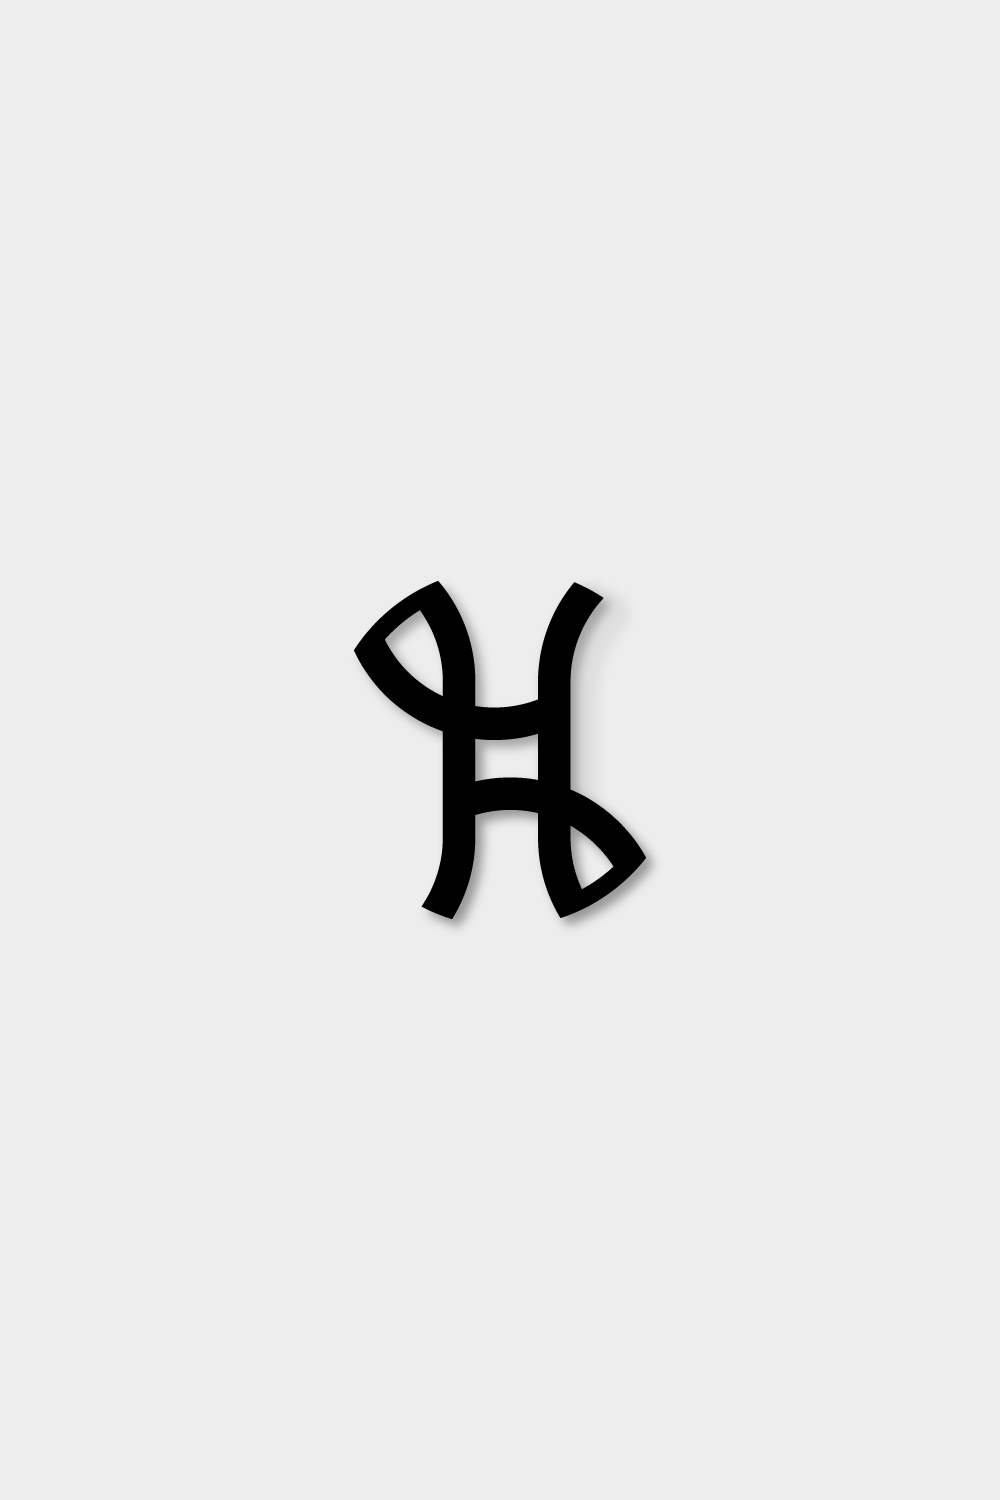 H letter logo design pinterest preview image.